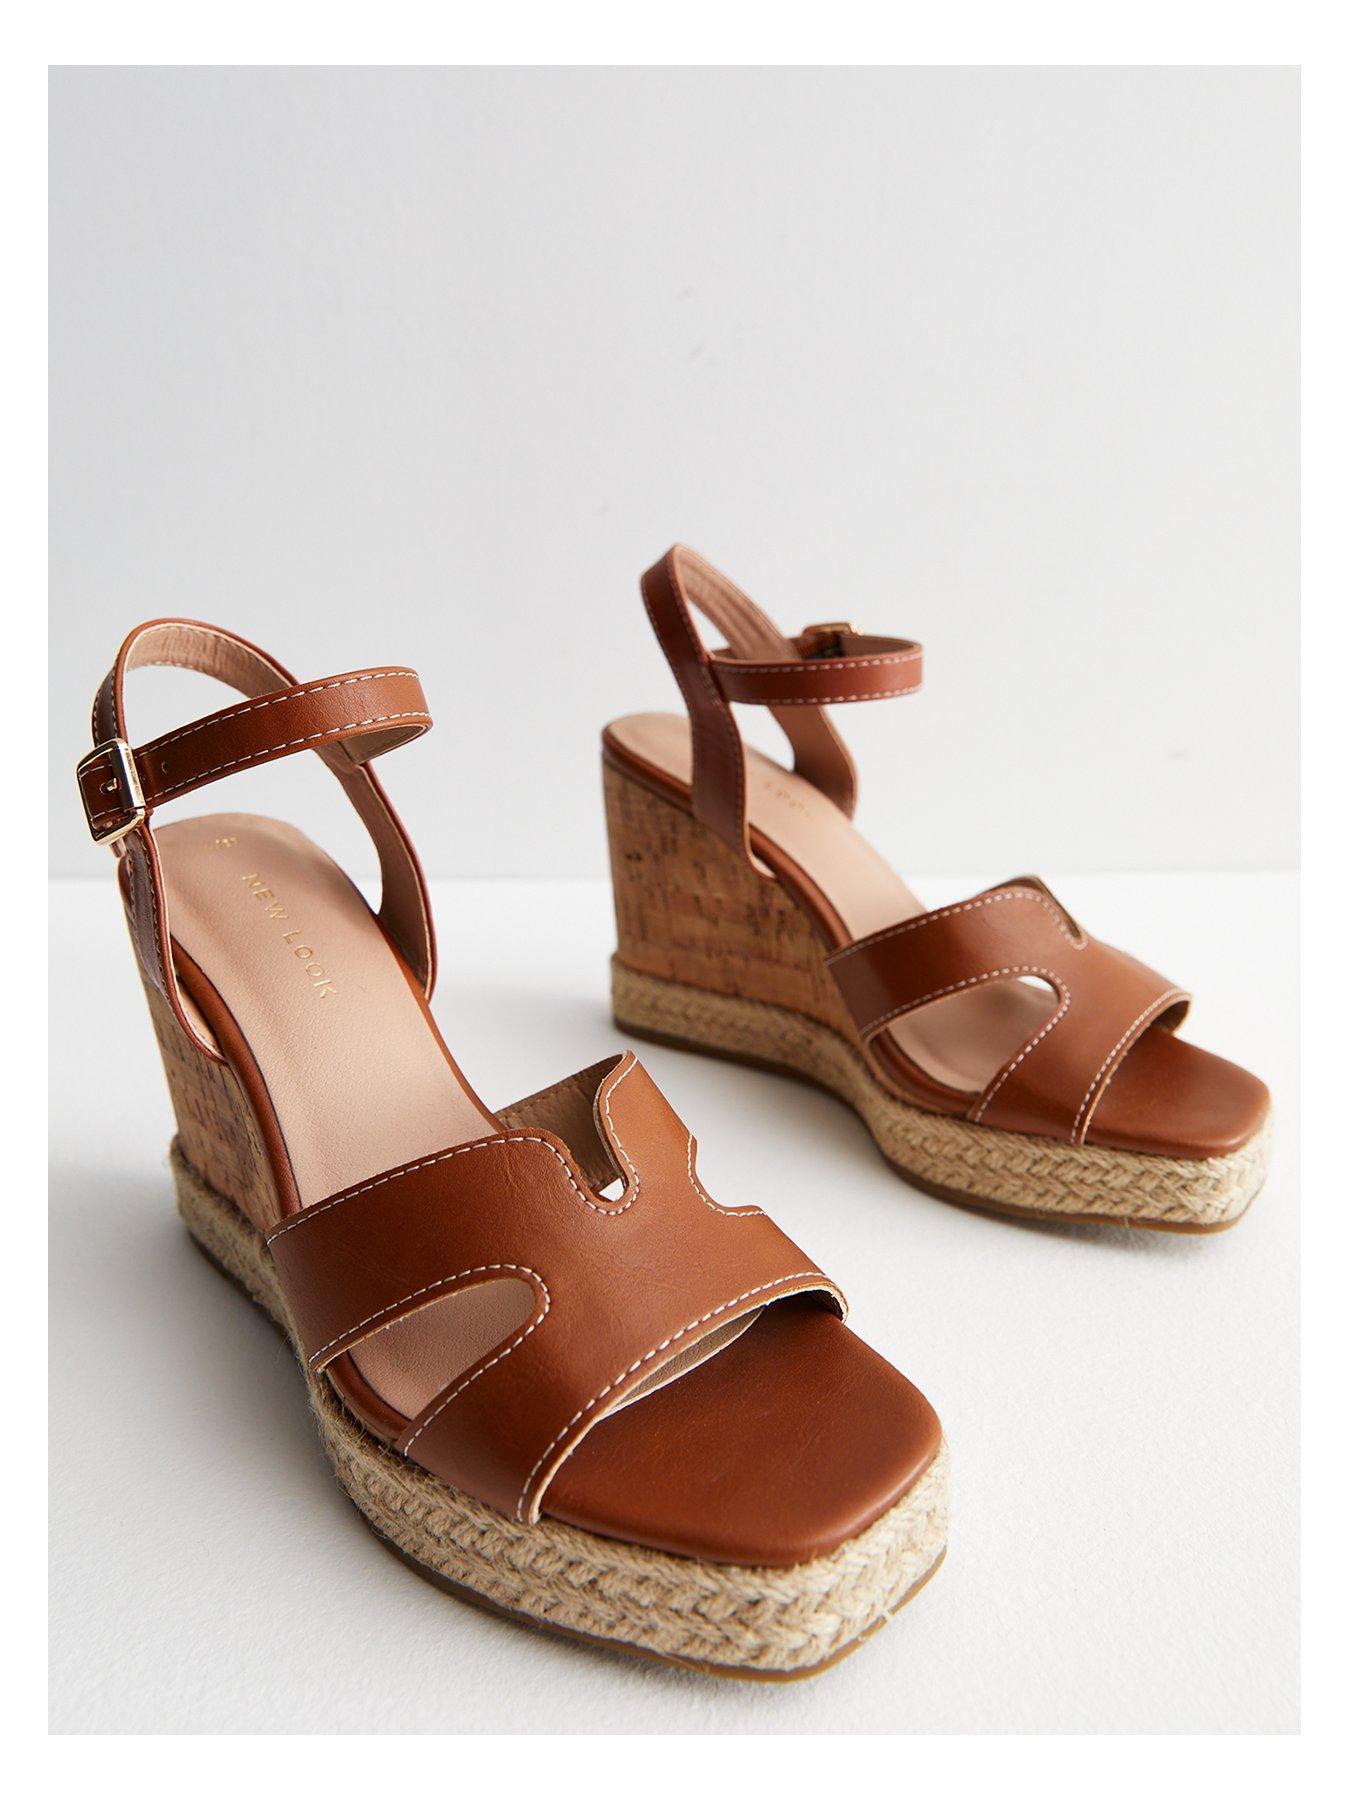 New Look Tan Leather-Look Espadrille Trim Wedge Heel Sandals